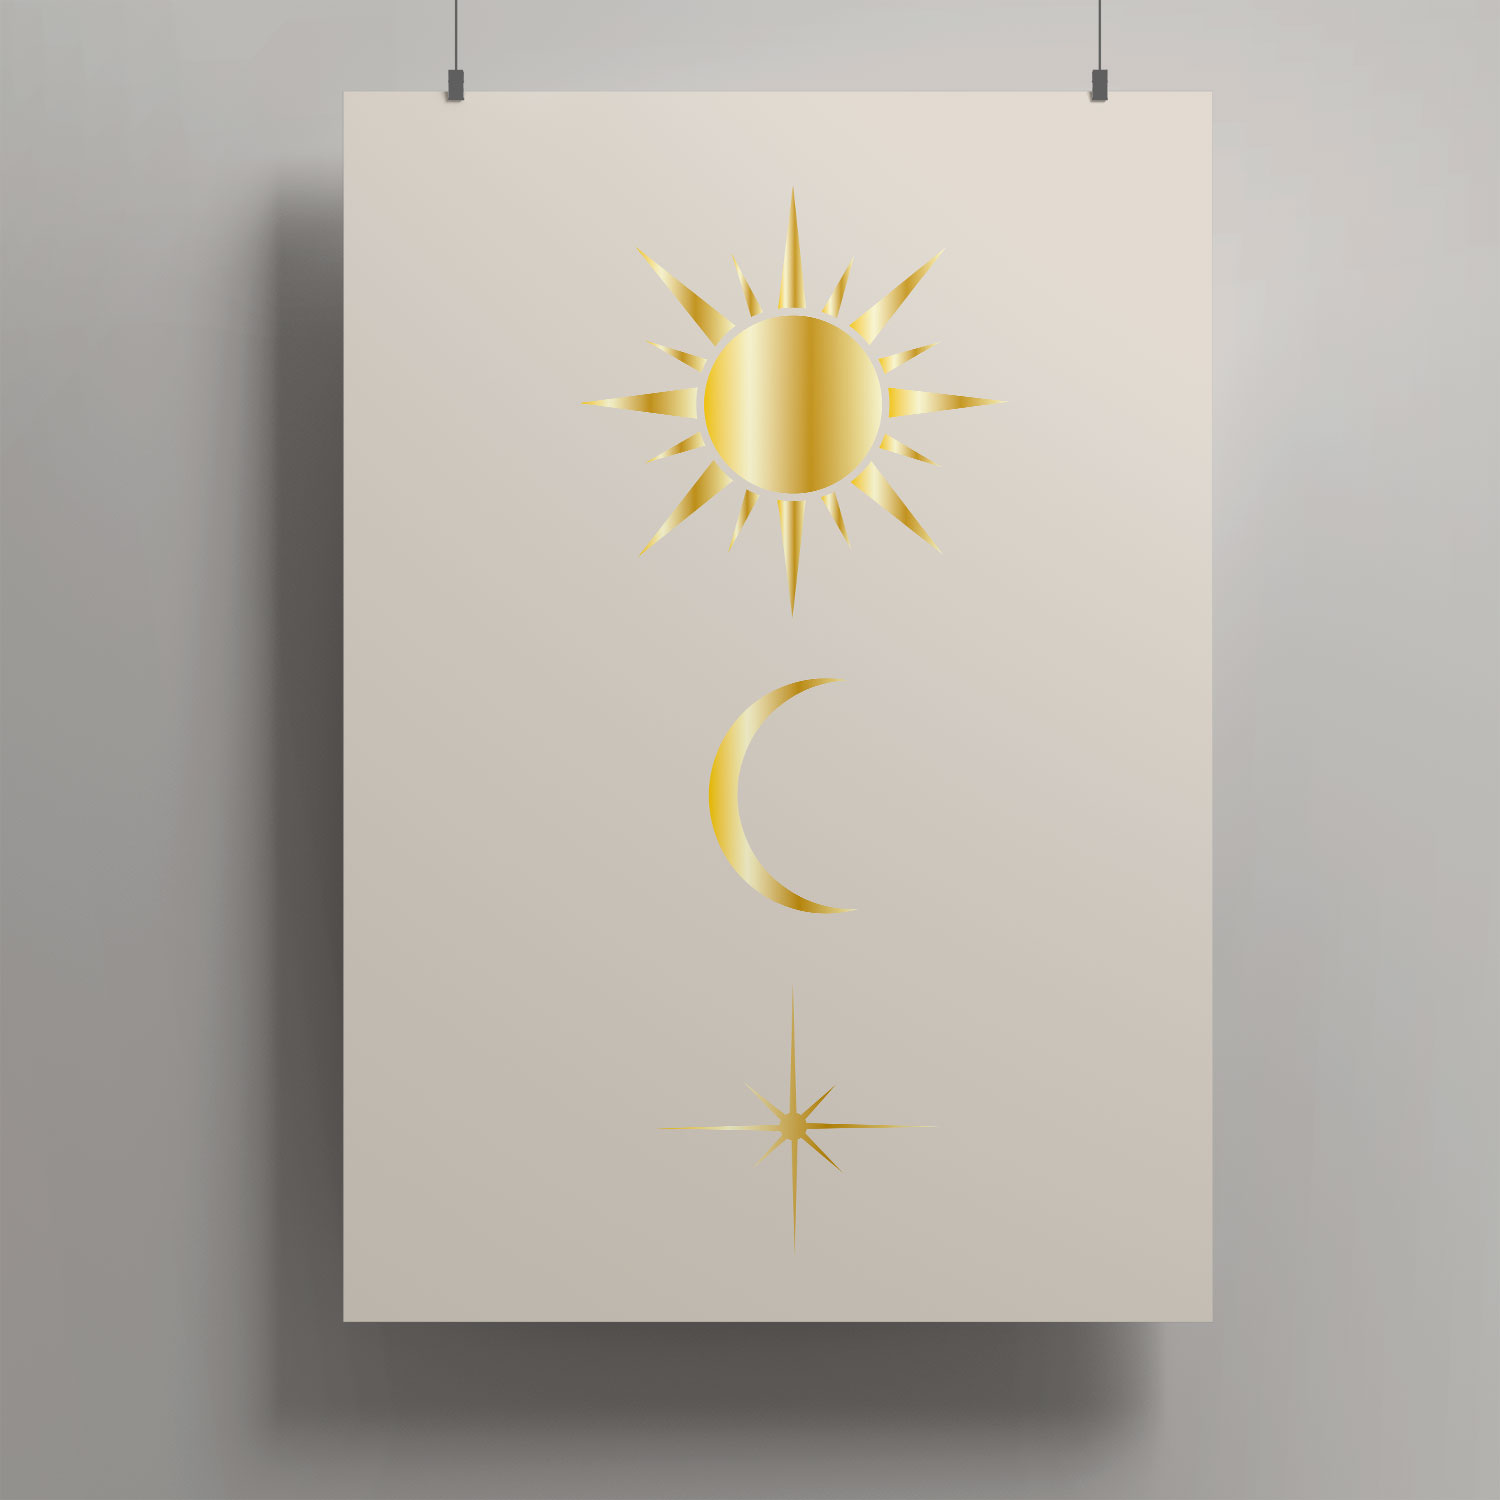 Artprint A3 - Toni Starck - Sun, moon, star